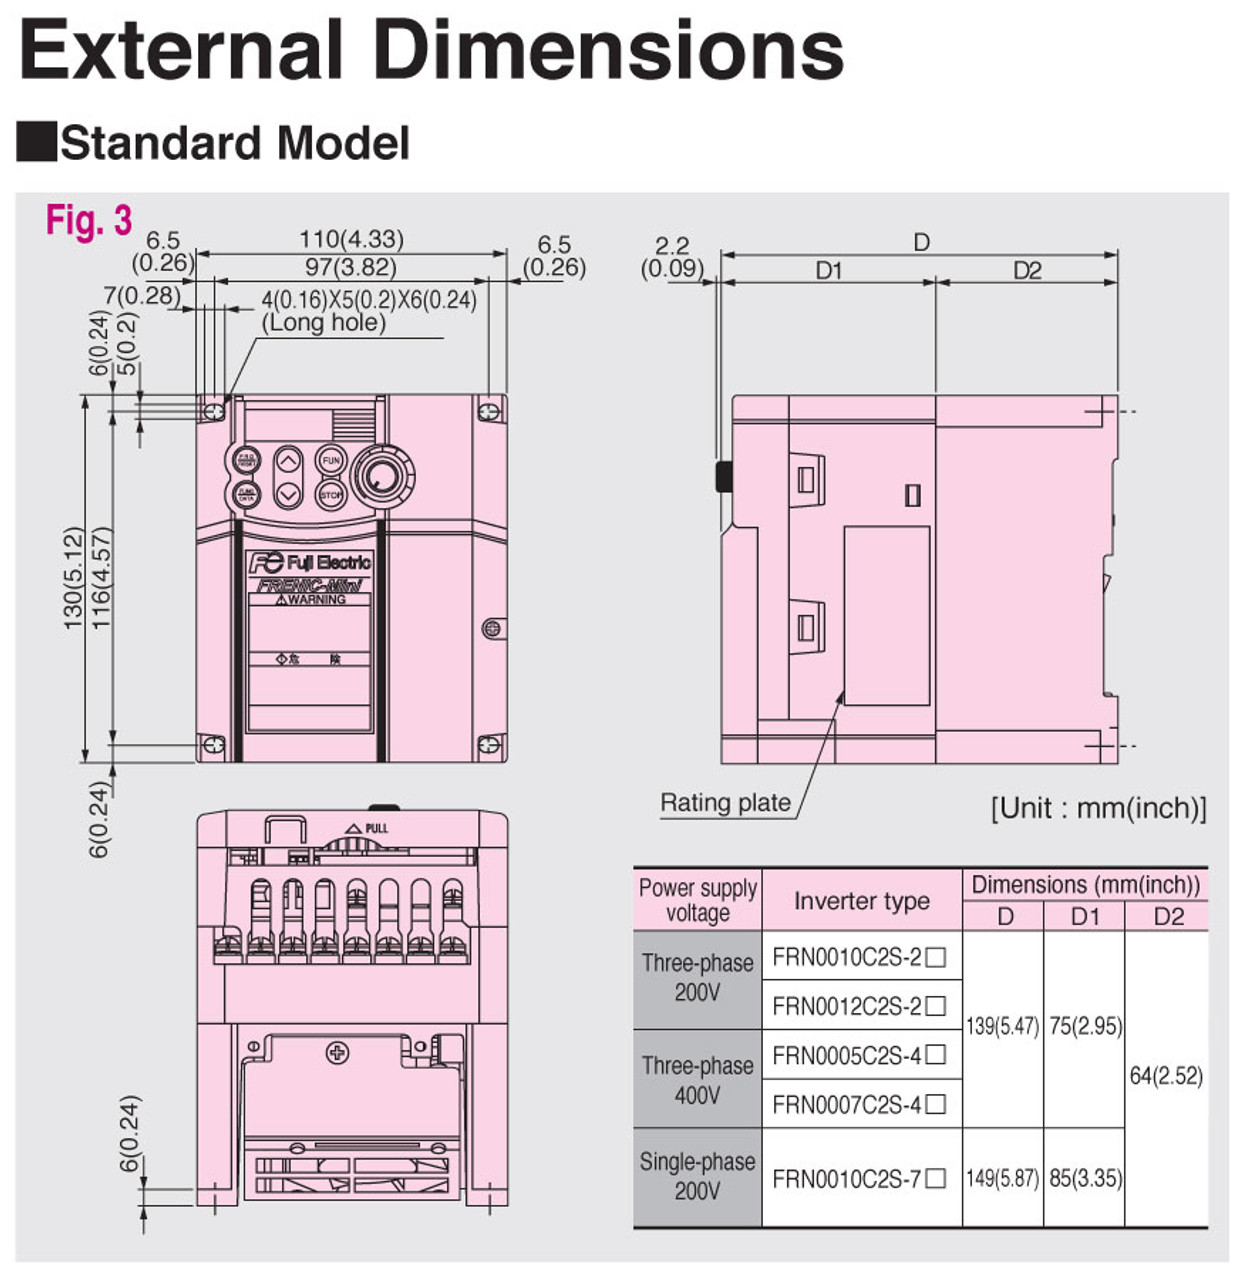 FRN0005C2S-4U - Dimensions